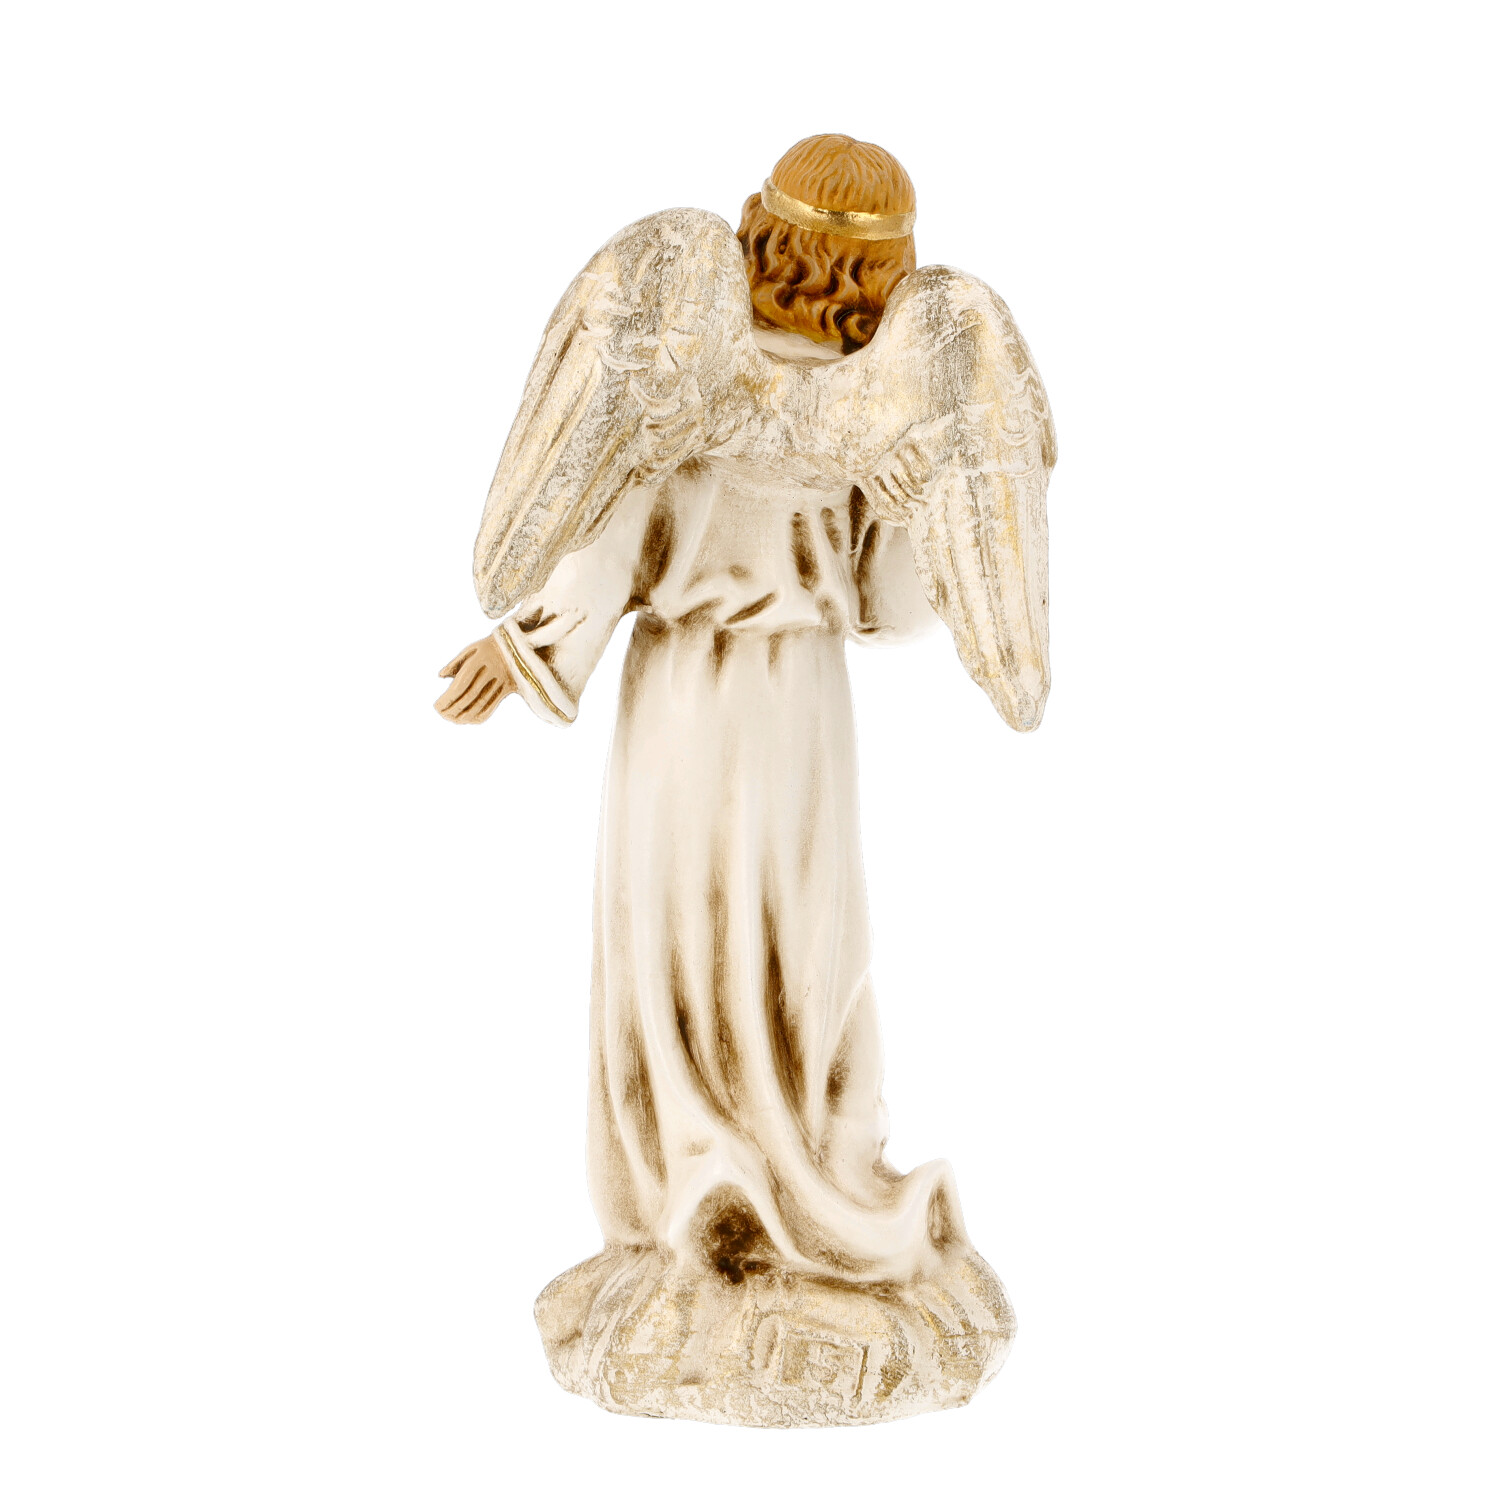 Proclaiming angel - Marolin Nativity figure - made in Germany